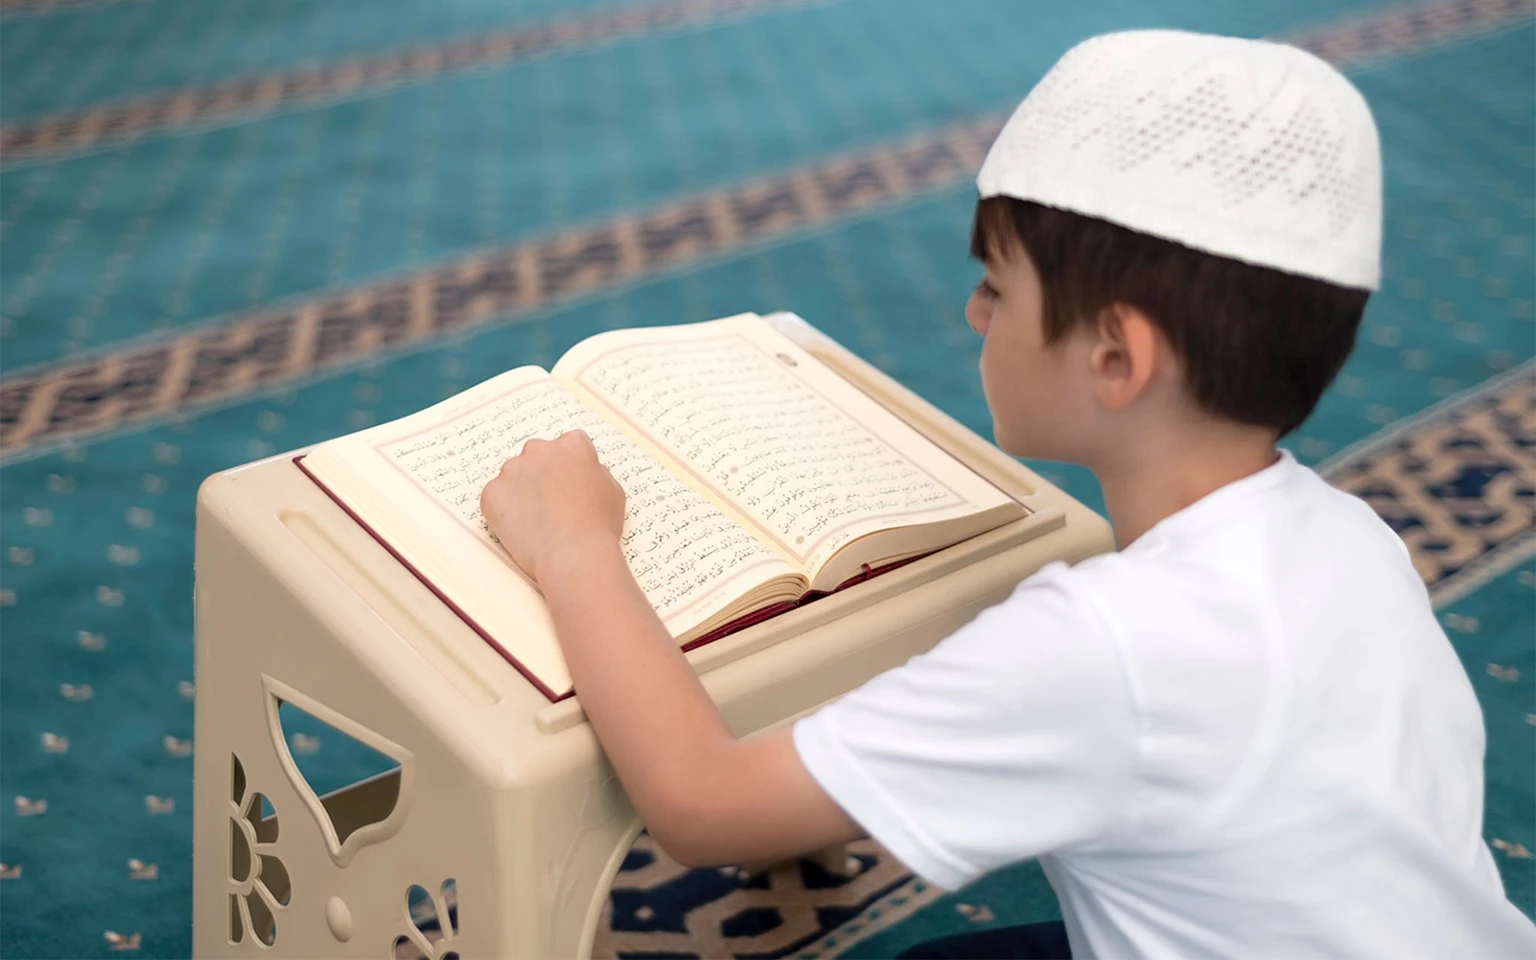 Quran classes for kids